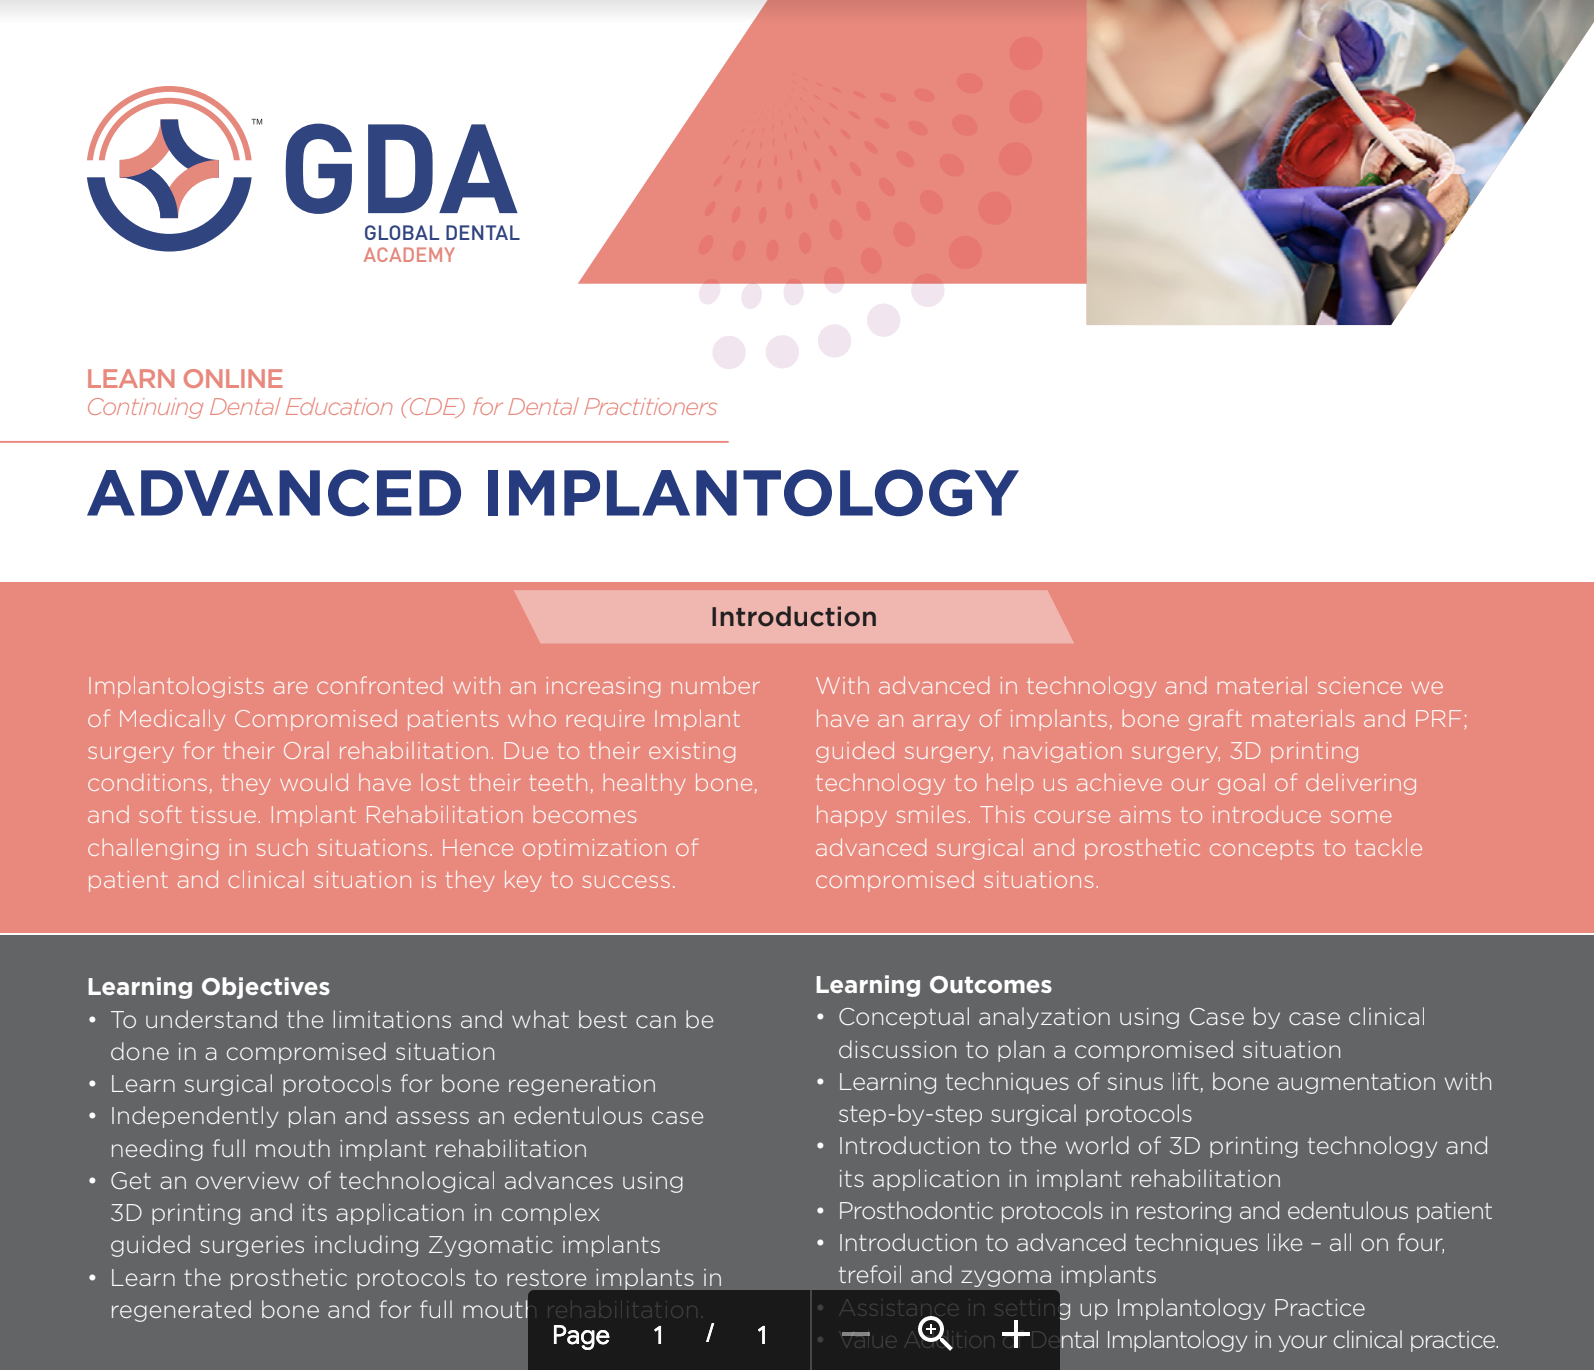 Advanced Implantology by Global Dental Academy (GDA)